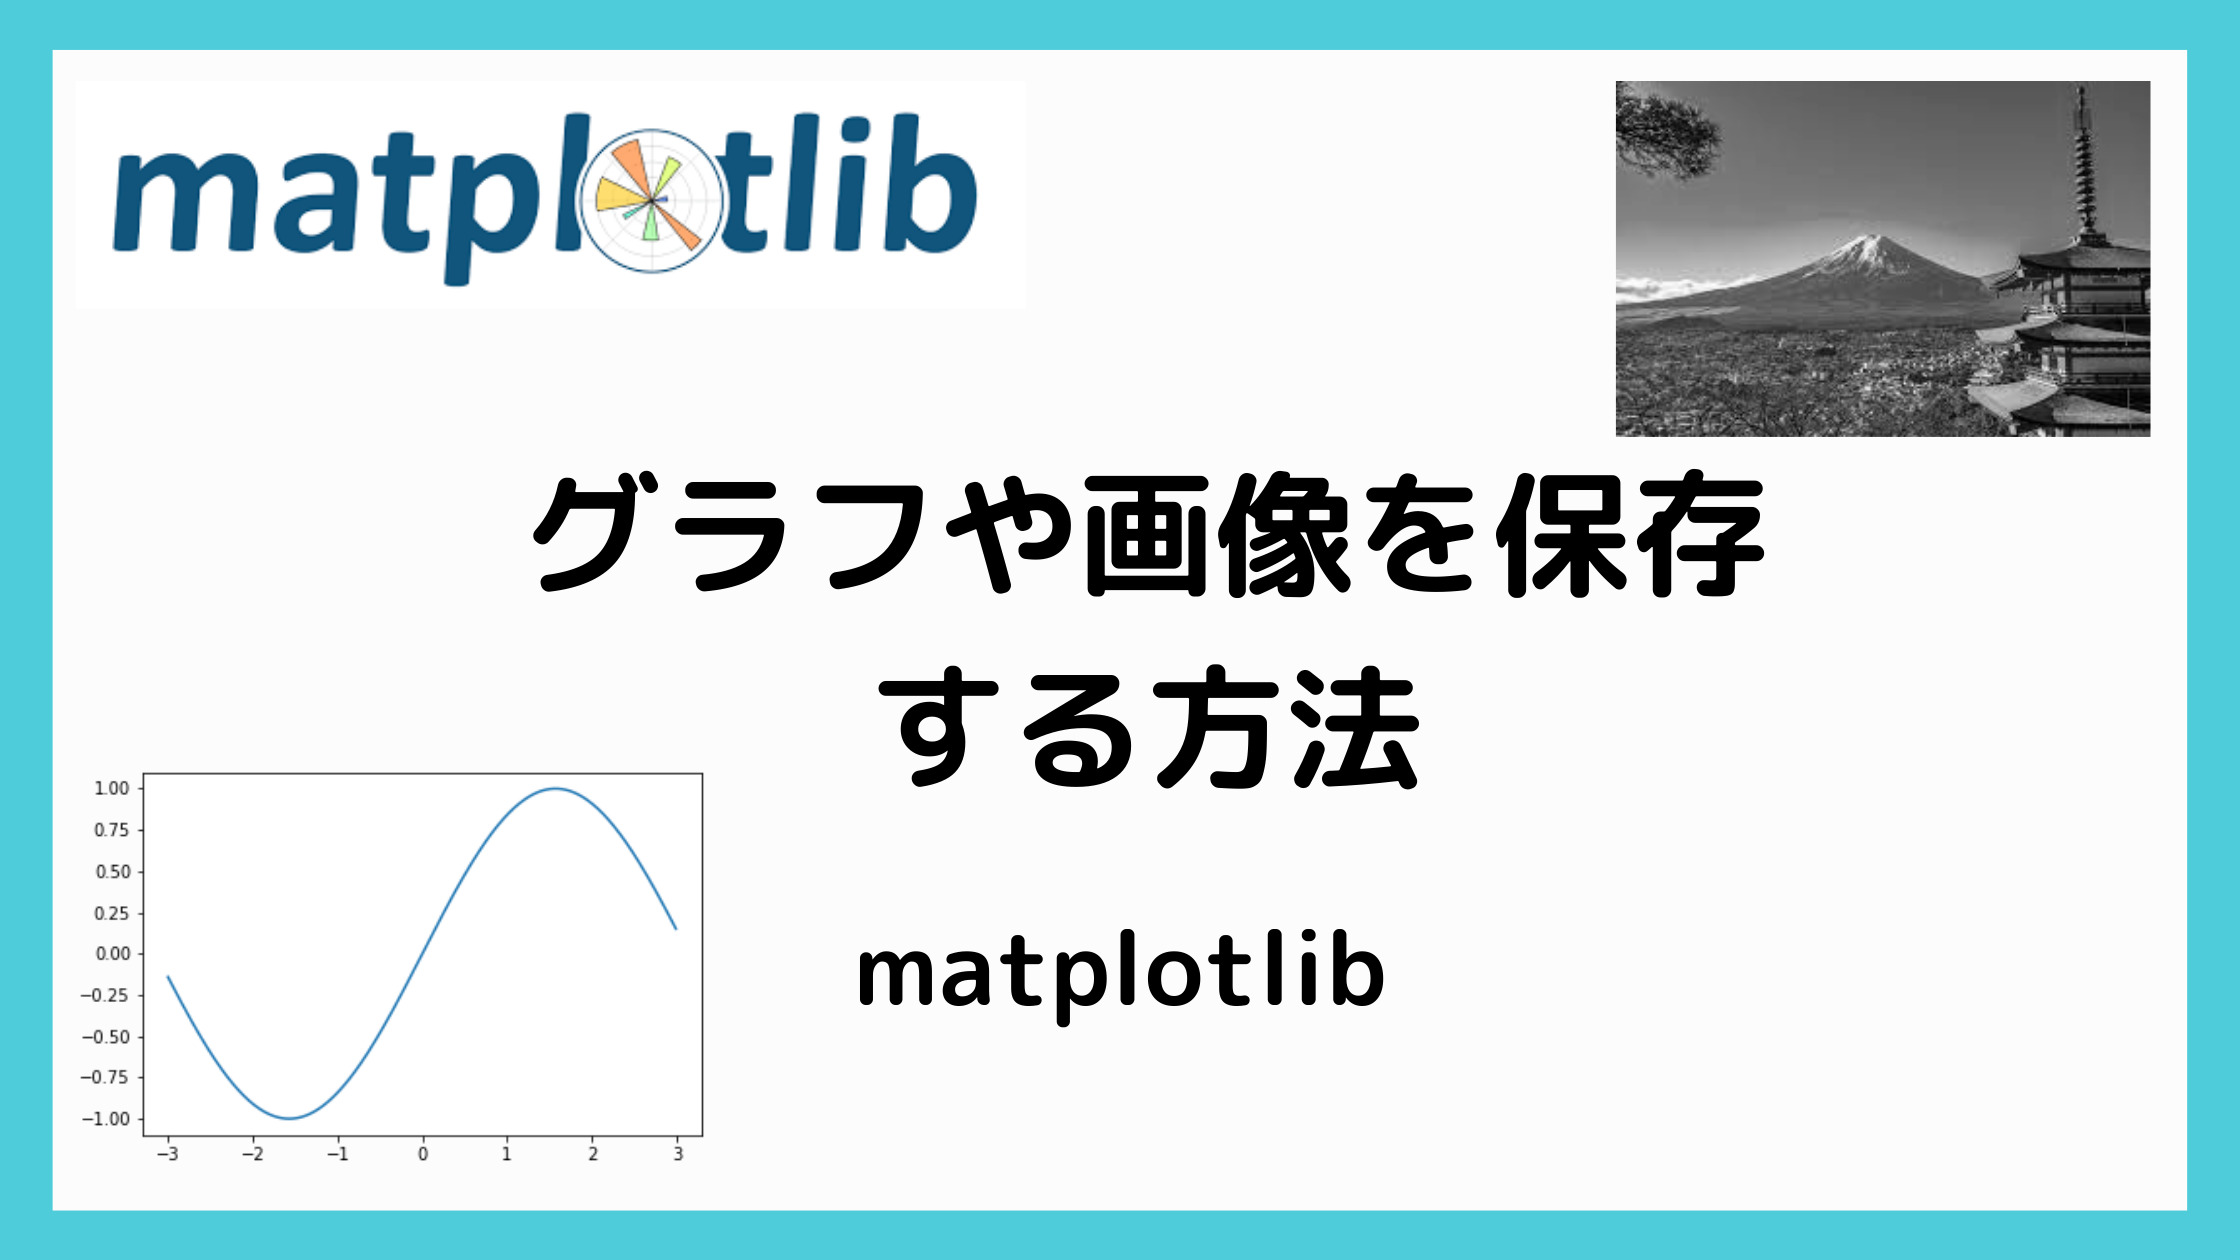 matplotlibの保存の記事のアイキャッチ